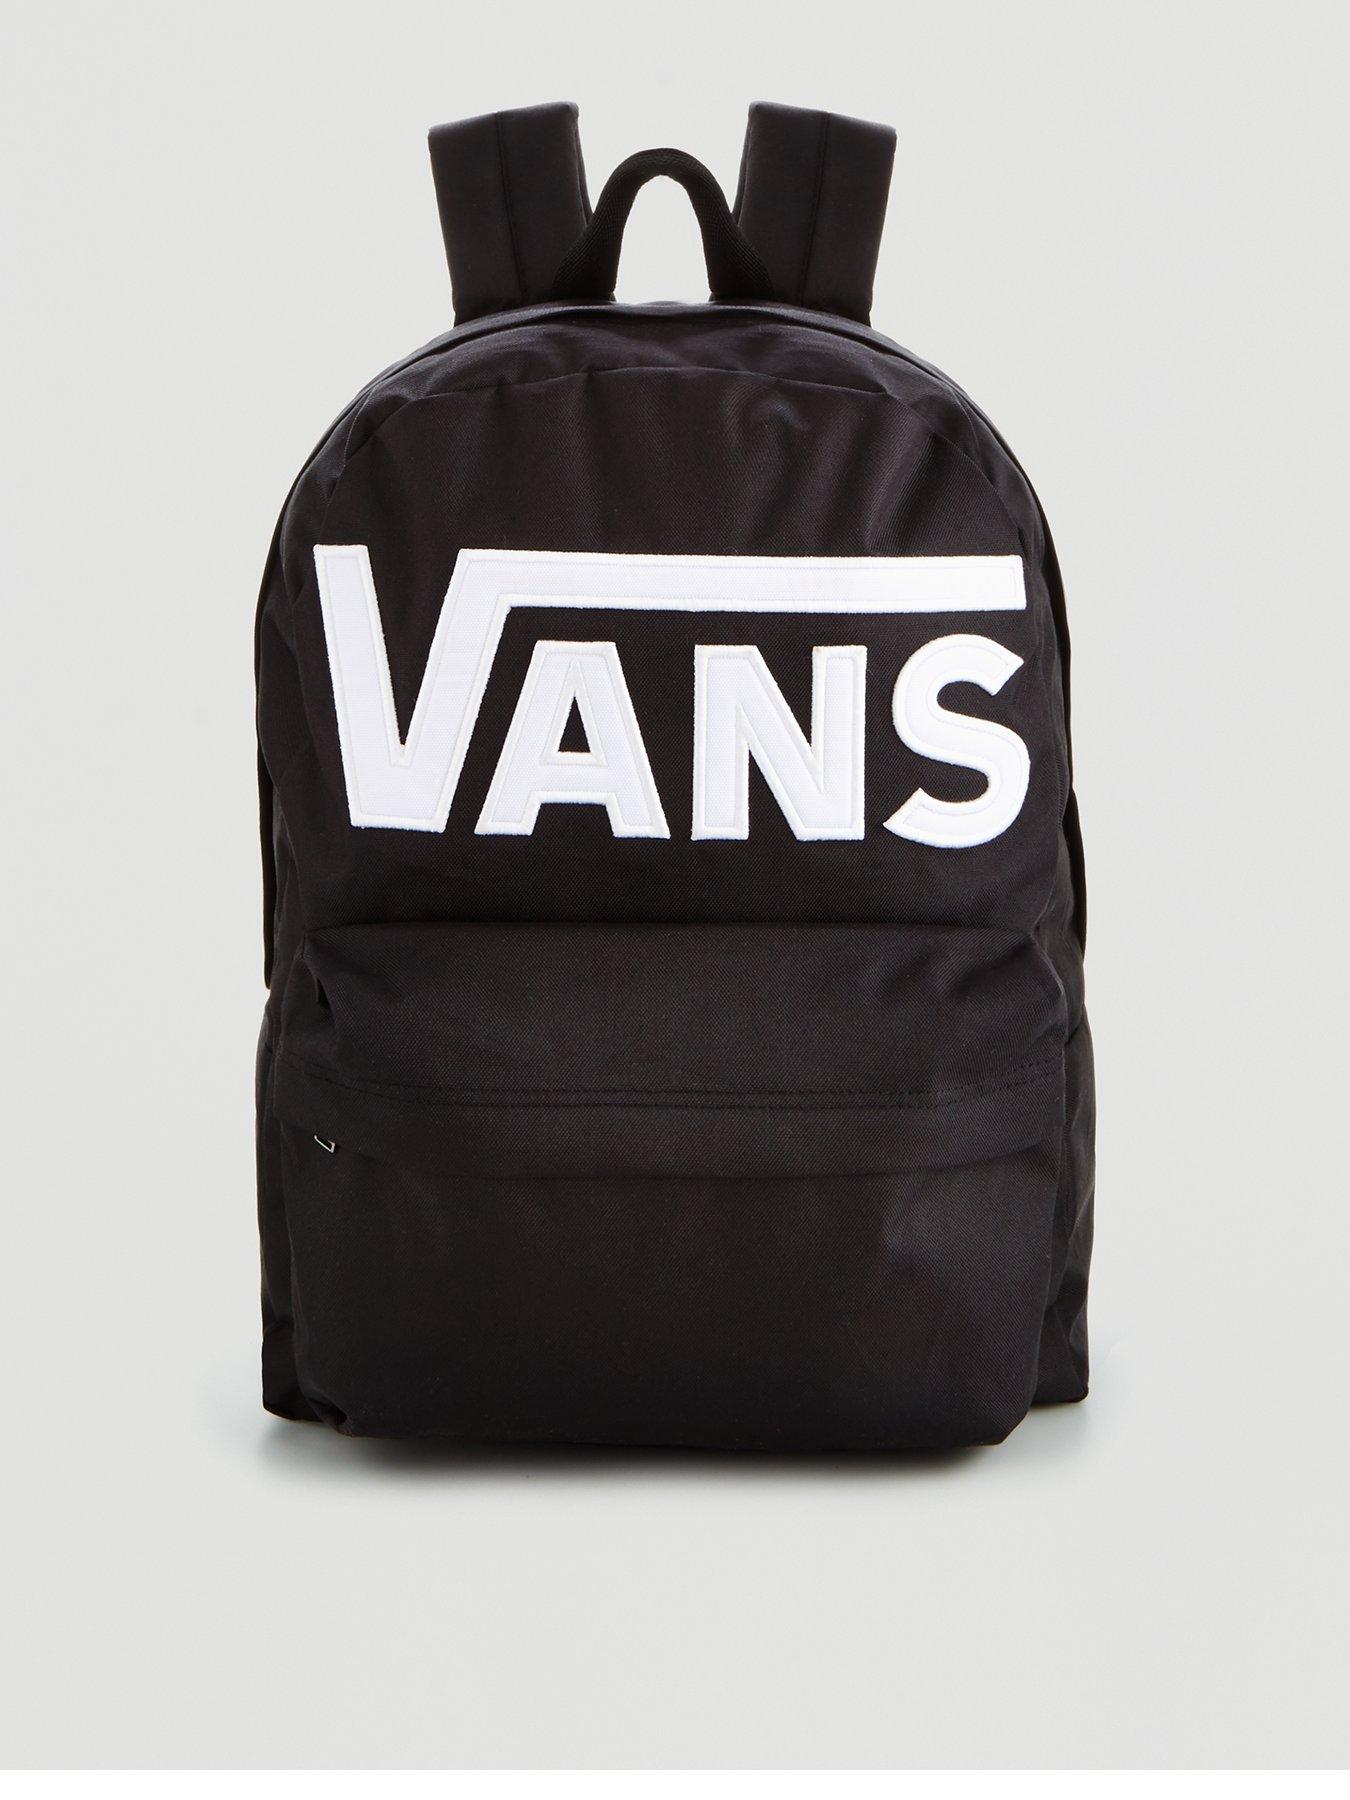 plain black vans backpack